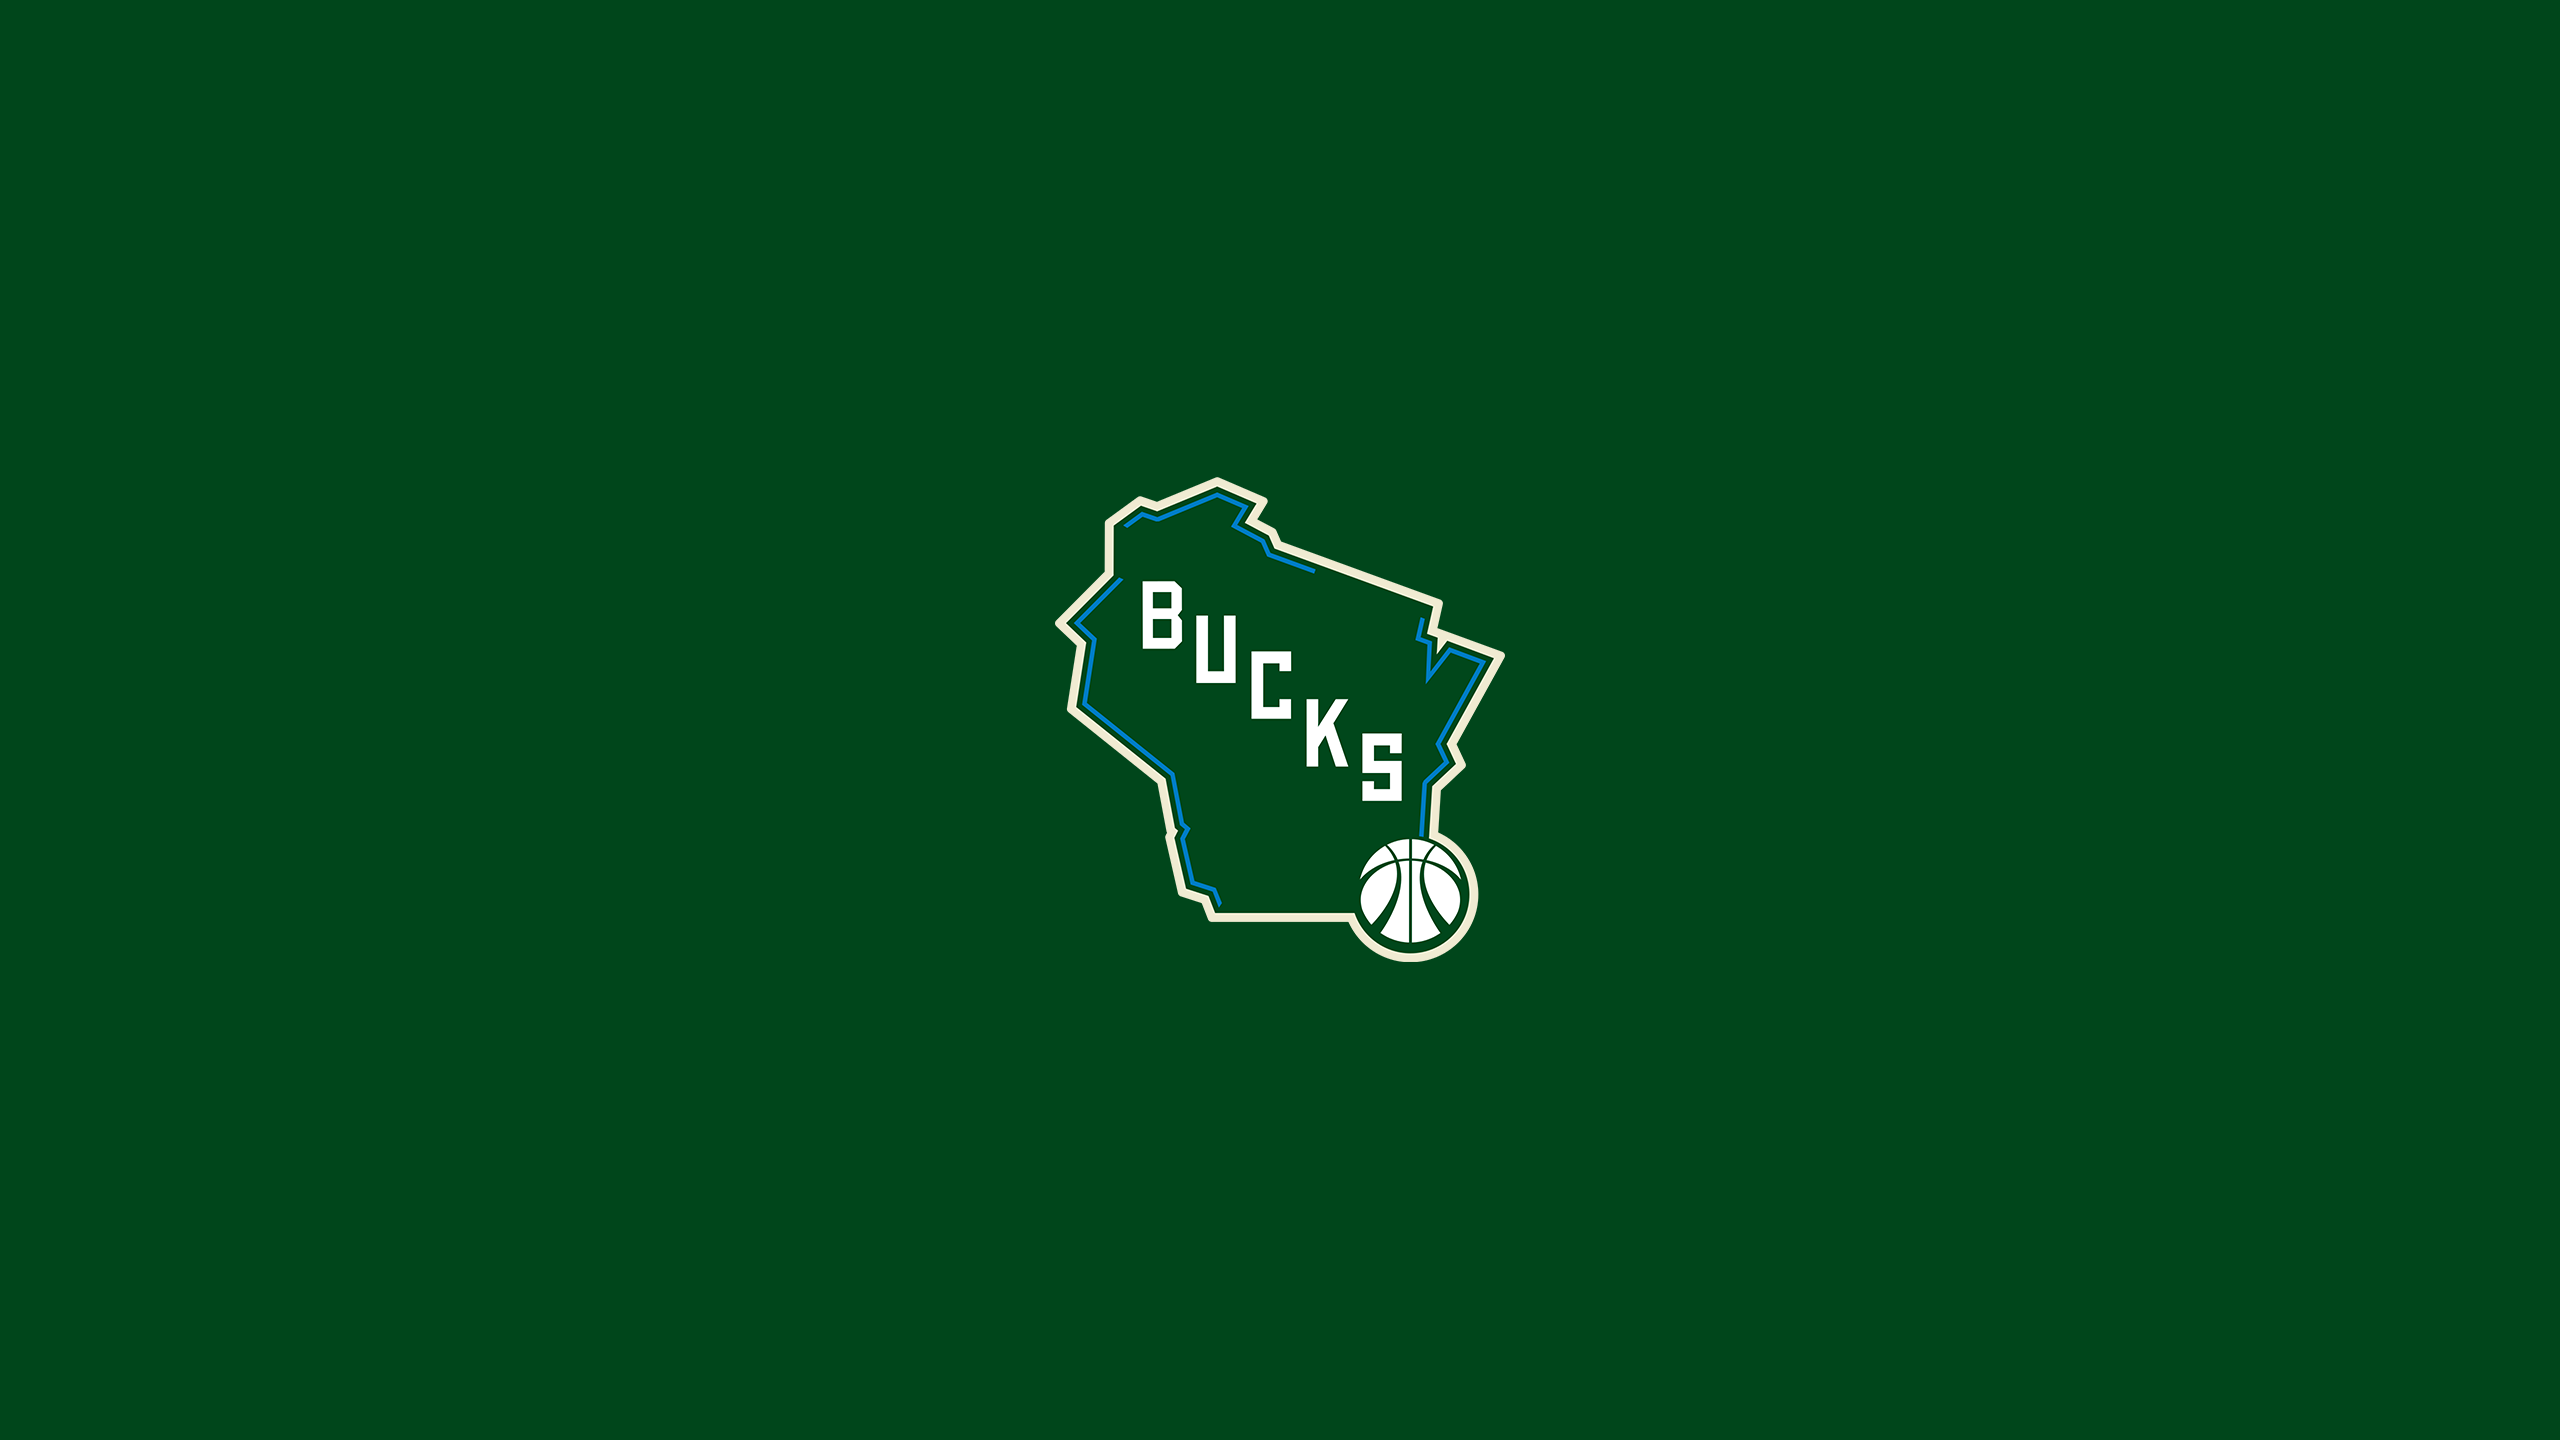 Sports Milwaukee Bucks HD Wallpaper | Background Image